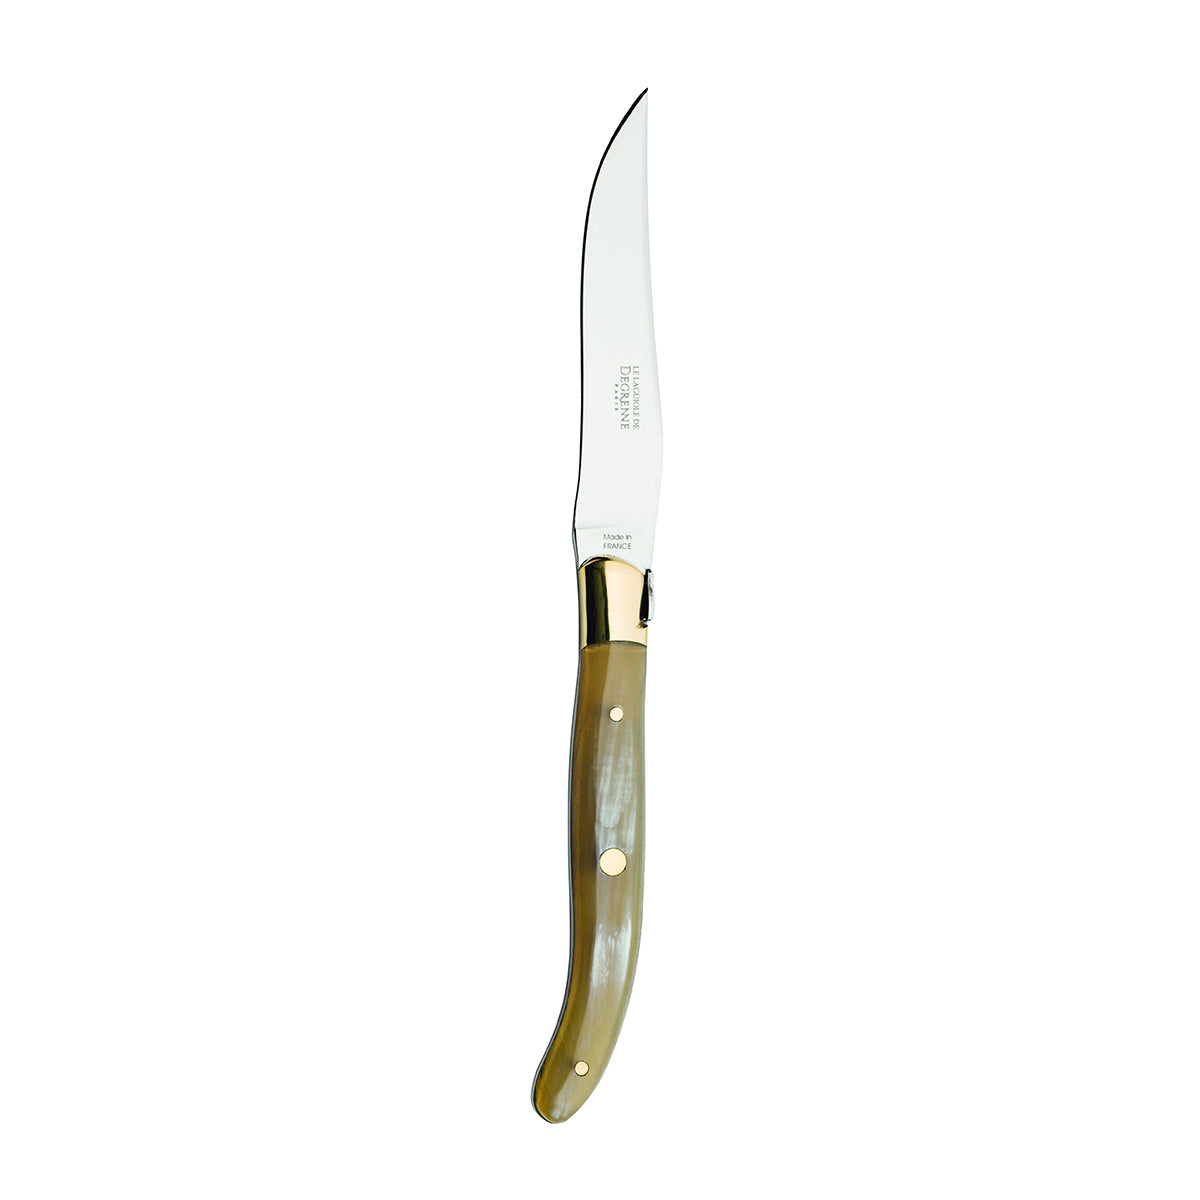 LAGUIOLE KNIVES Steak knives clear horn